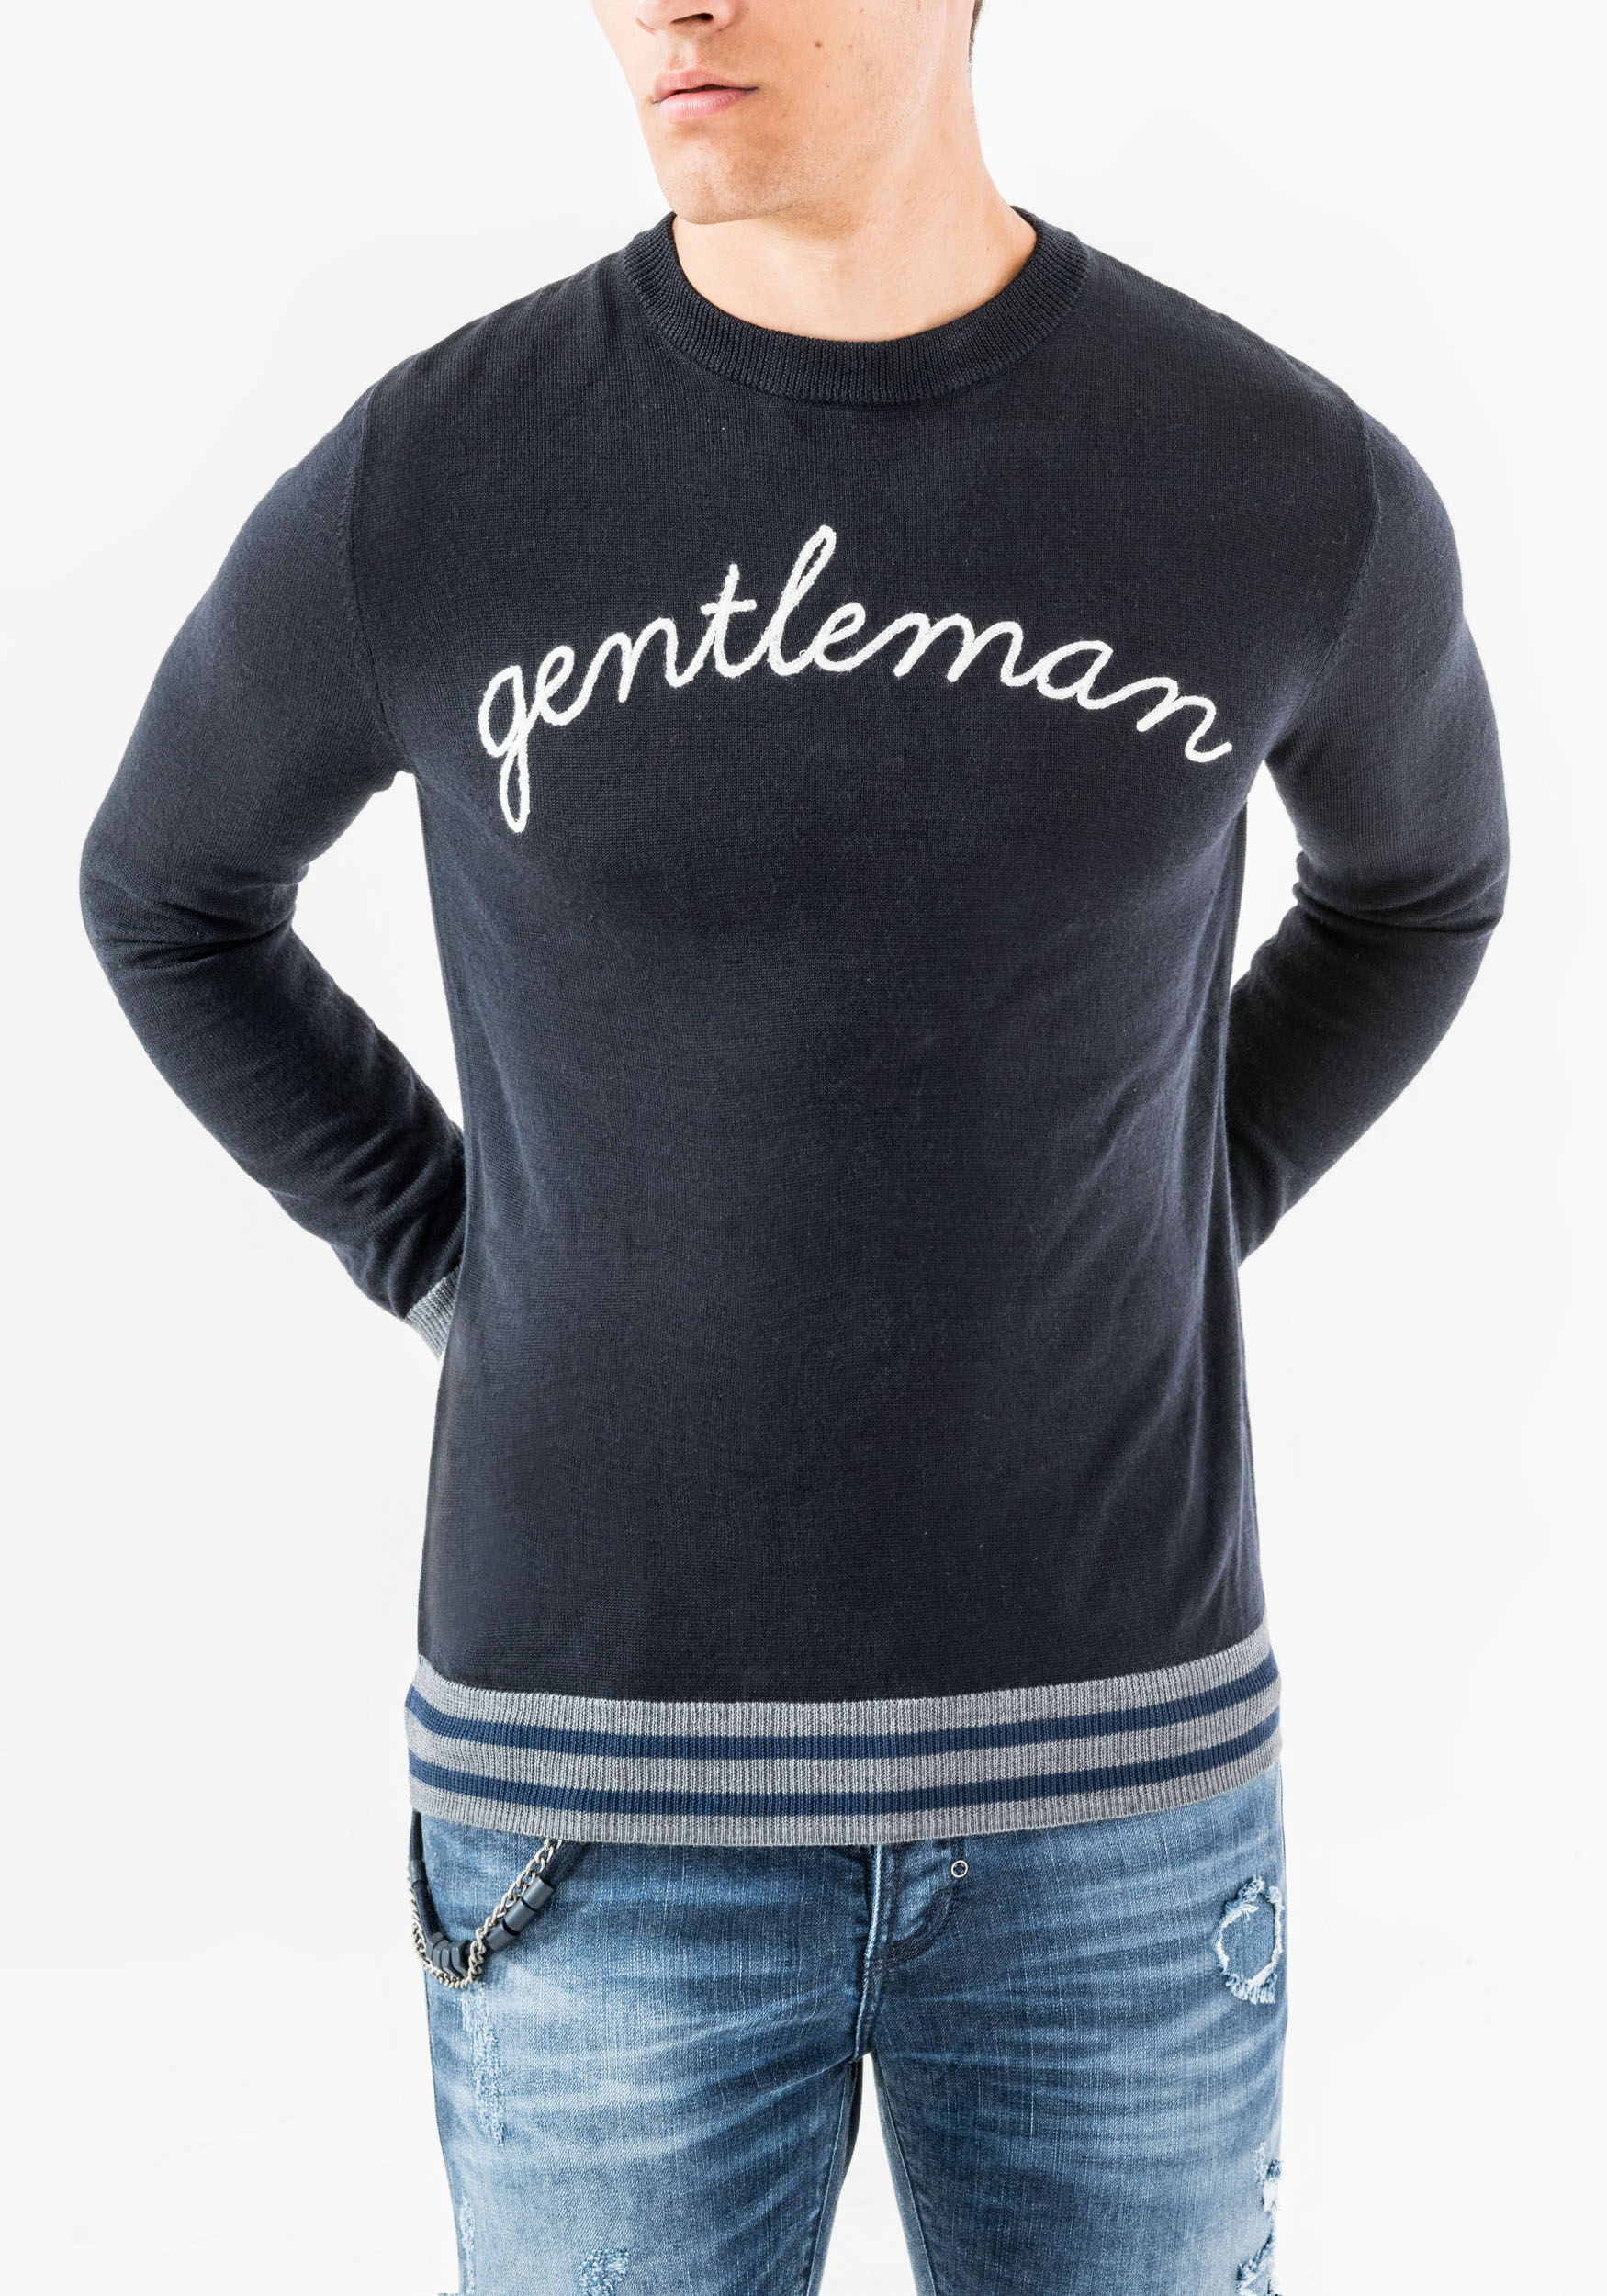 wat betreft converteerbaar Dapperheid Antony Morato Crew-neck Sweater - J Style Menswear